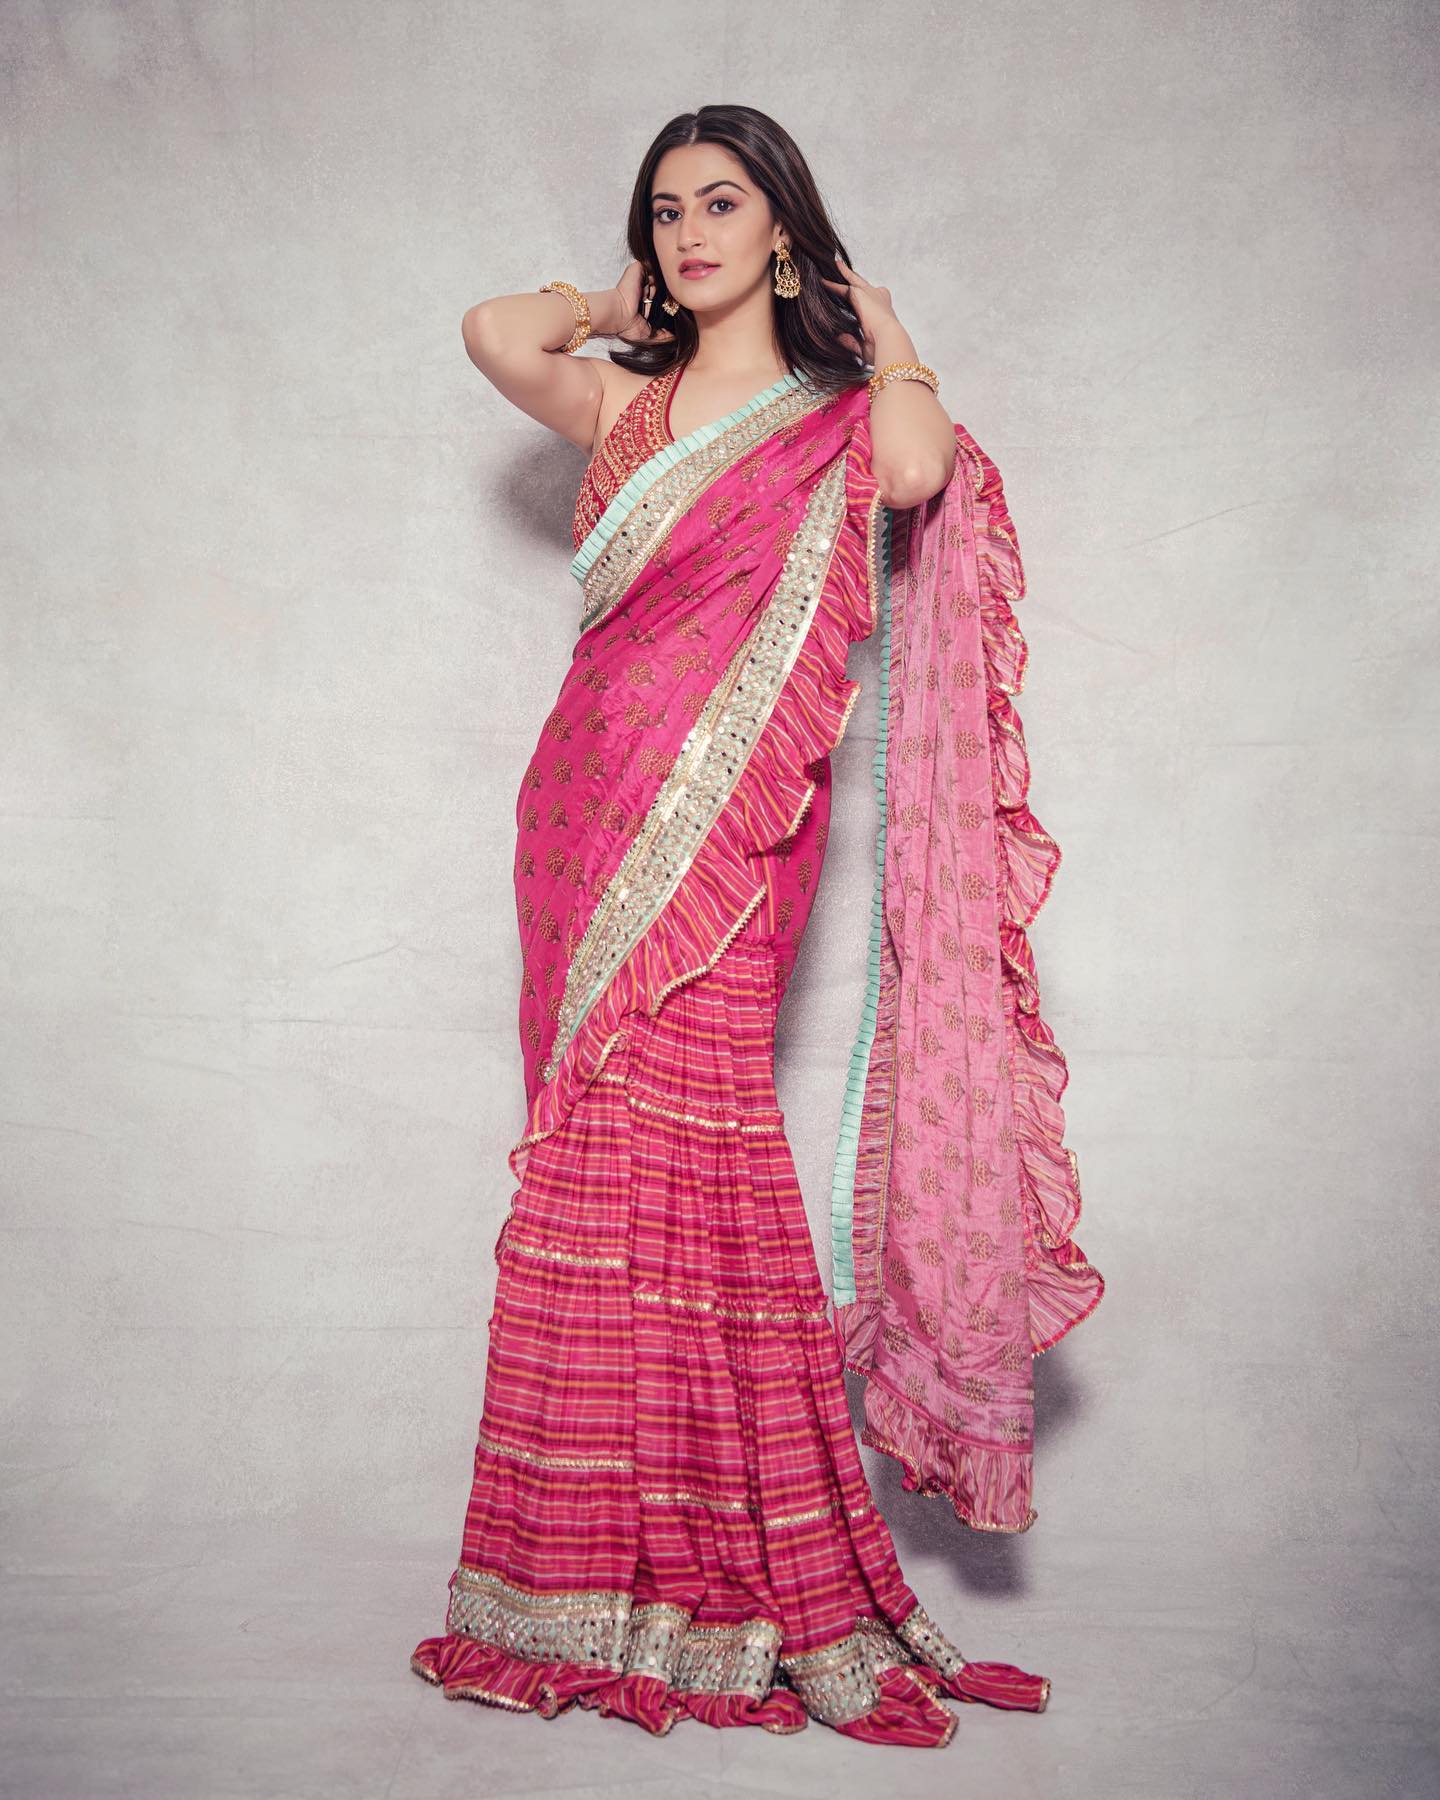 Yeh Saali Aashiqui Fame Shivaleeka Oberoi In Pink Chiffon Printed Ruffle Saree Set - Exclusive Outfits & Looks